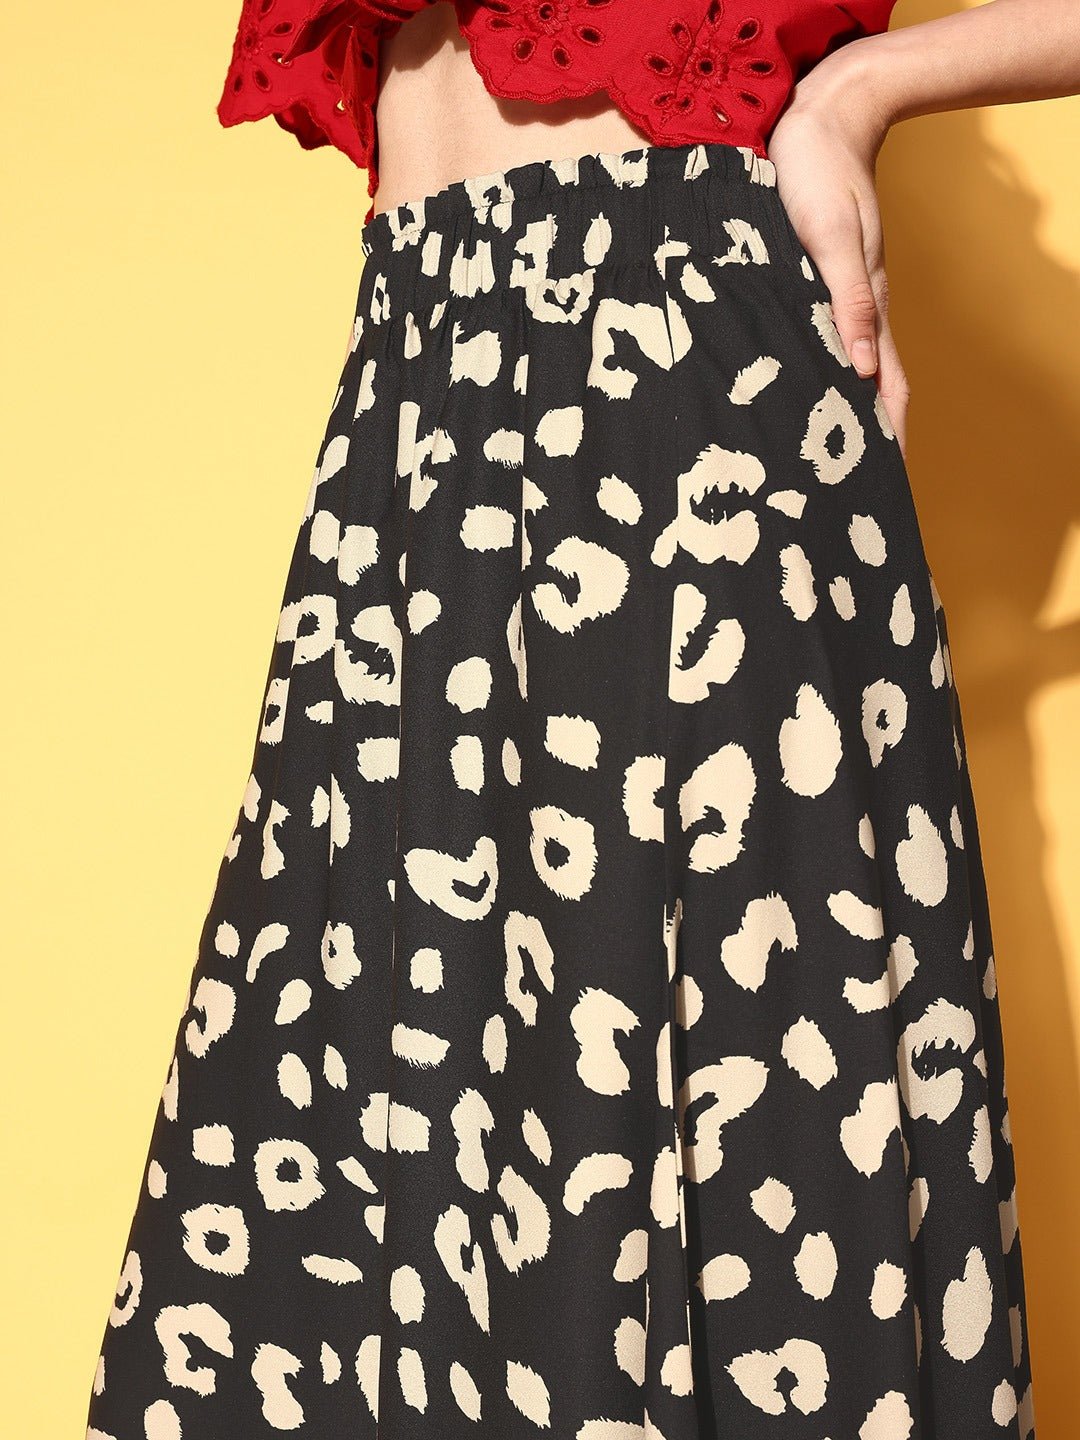 Folk Republic Women Black & Cream Animal Printed Crepe Flared A-Line Midi Skirt - #folk republic#